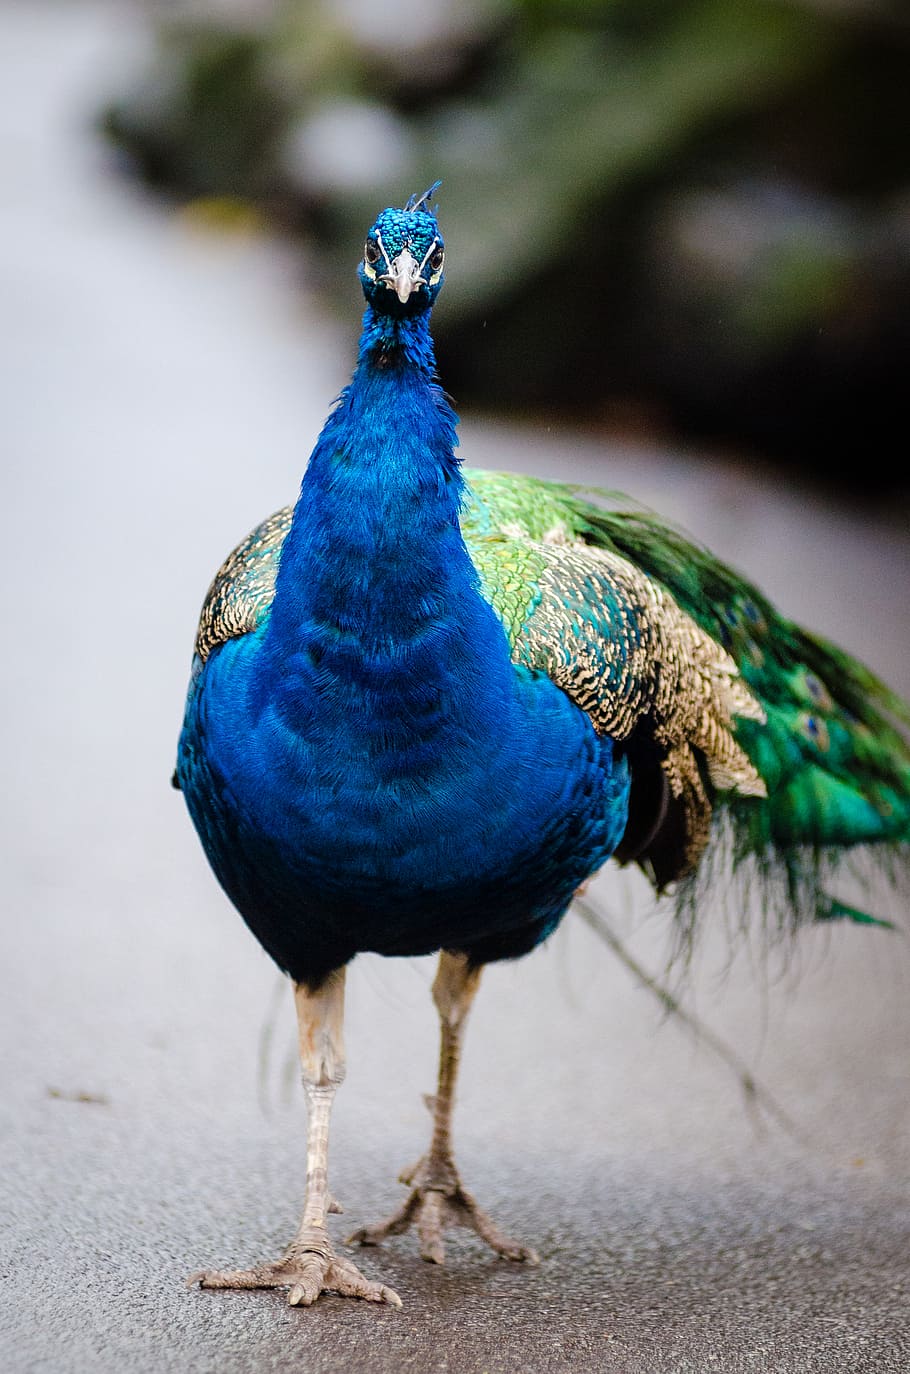 Peacock, closeup photo of peacock, animal themes, animal, bird, vertebrate, one animal, animal wildlife, animals in the wild, blue